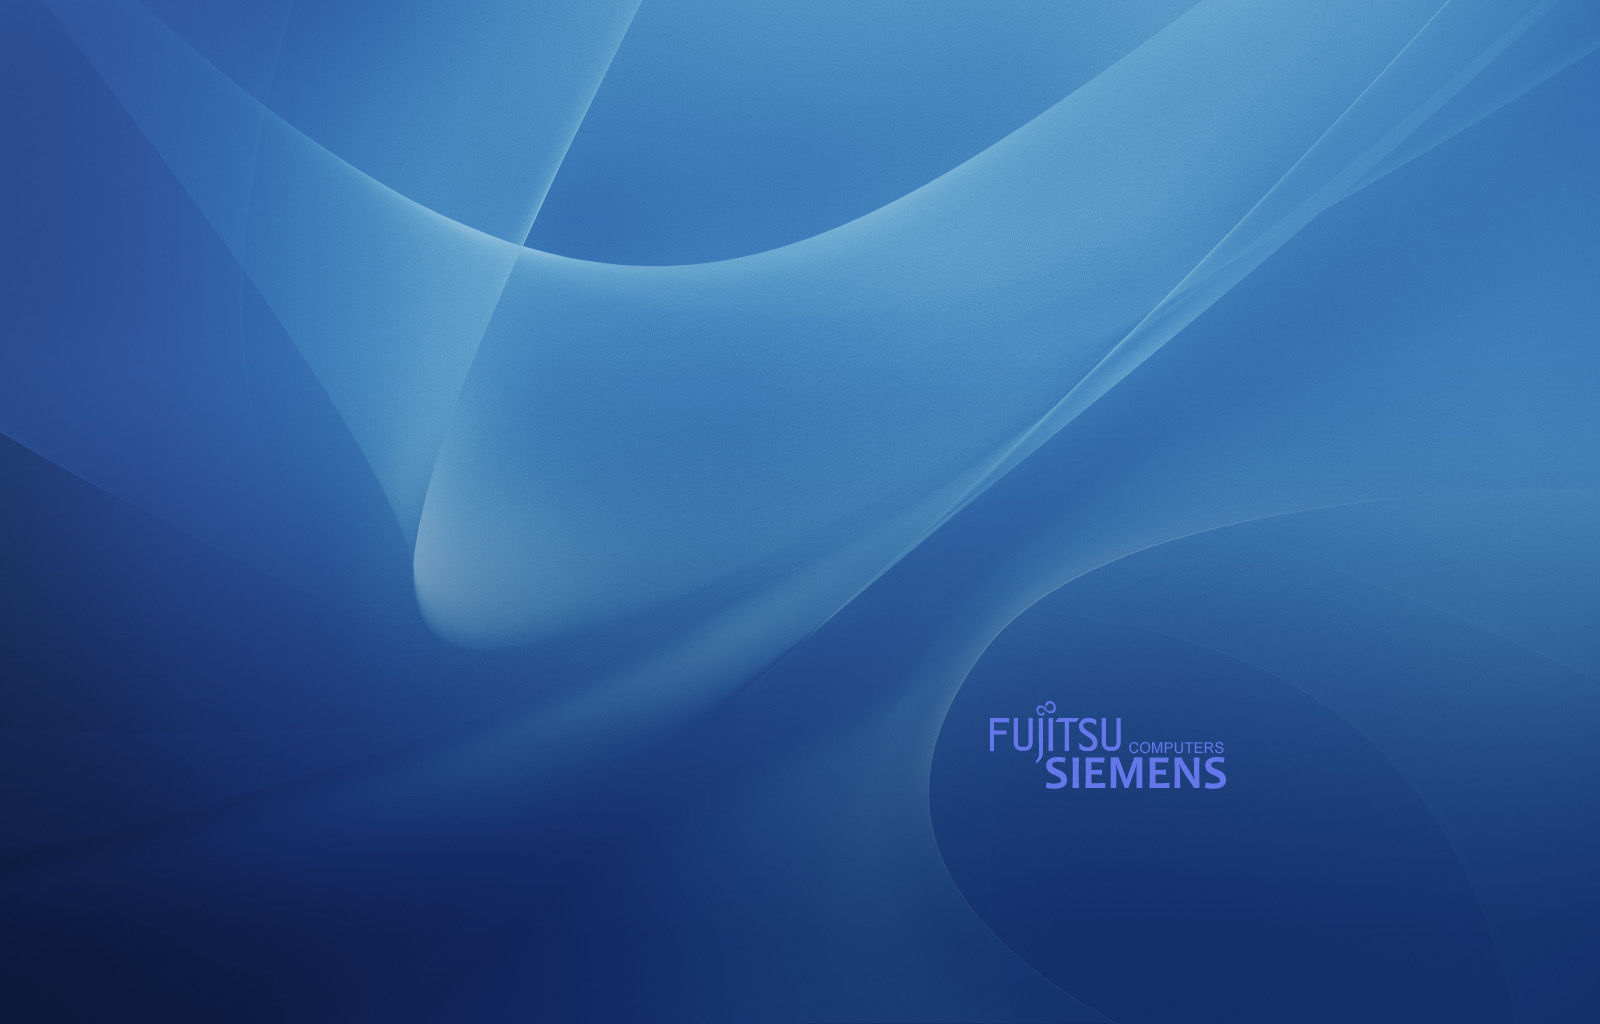  Fujitsu-Siemens